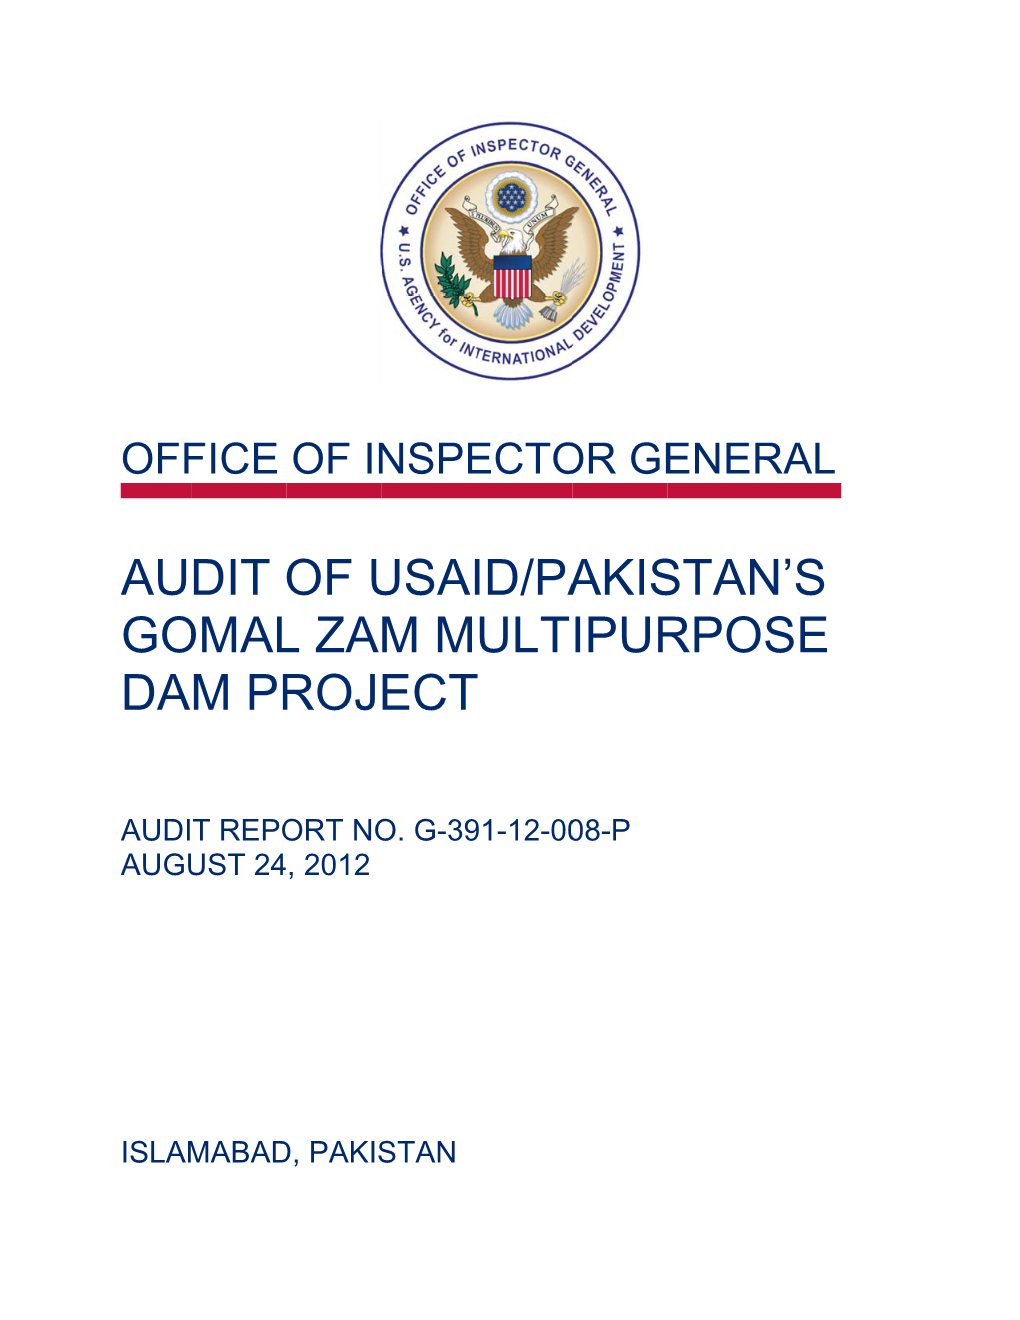 Audit of USAID/Pakistan's Gomal Zam Multipurpose Dam Project